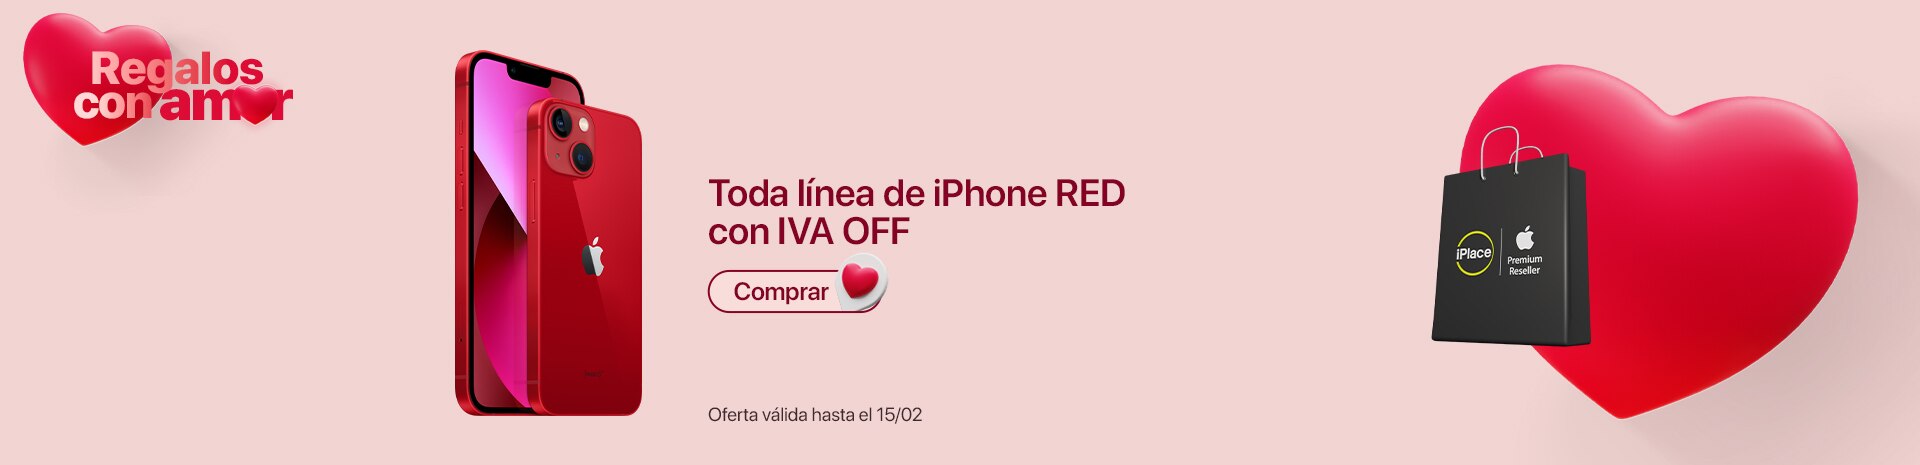 iPhone con IVA OFF | Regalos con Amor iPlace